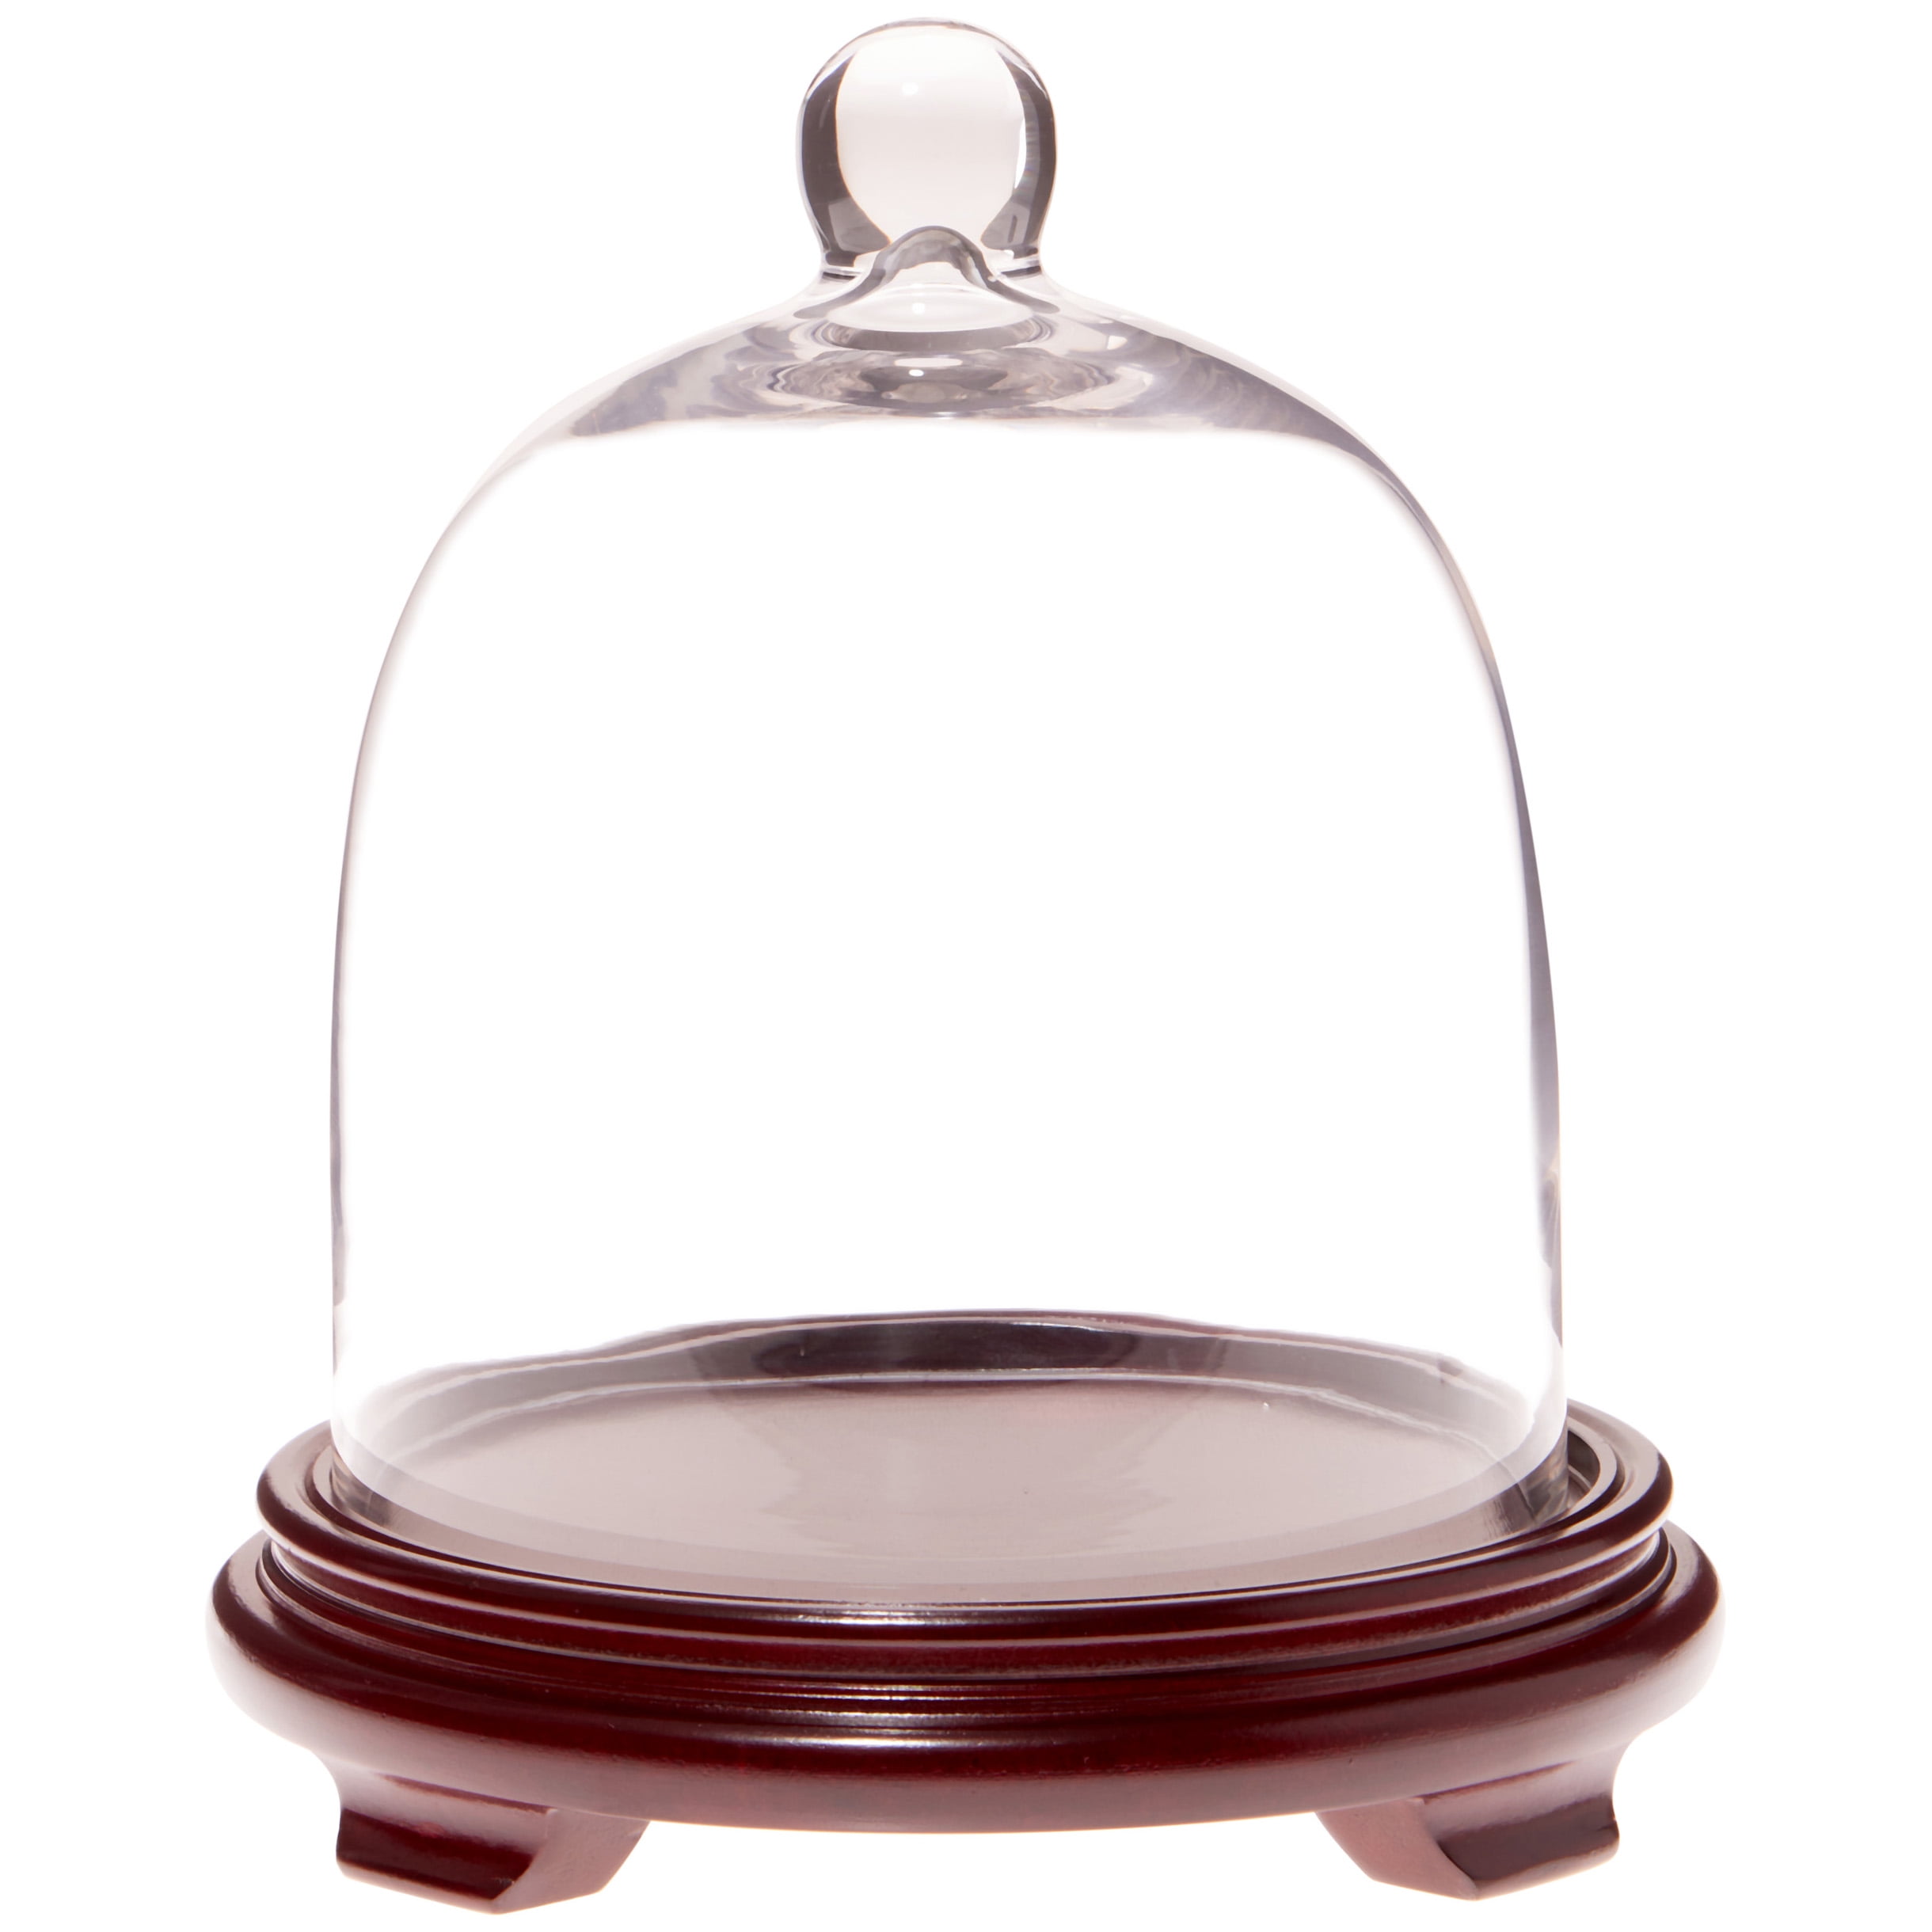 Plymor 5" x 6" Bell Jar Glass Display Dome Cloche Interior size 4.75" x 5" 